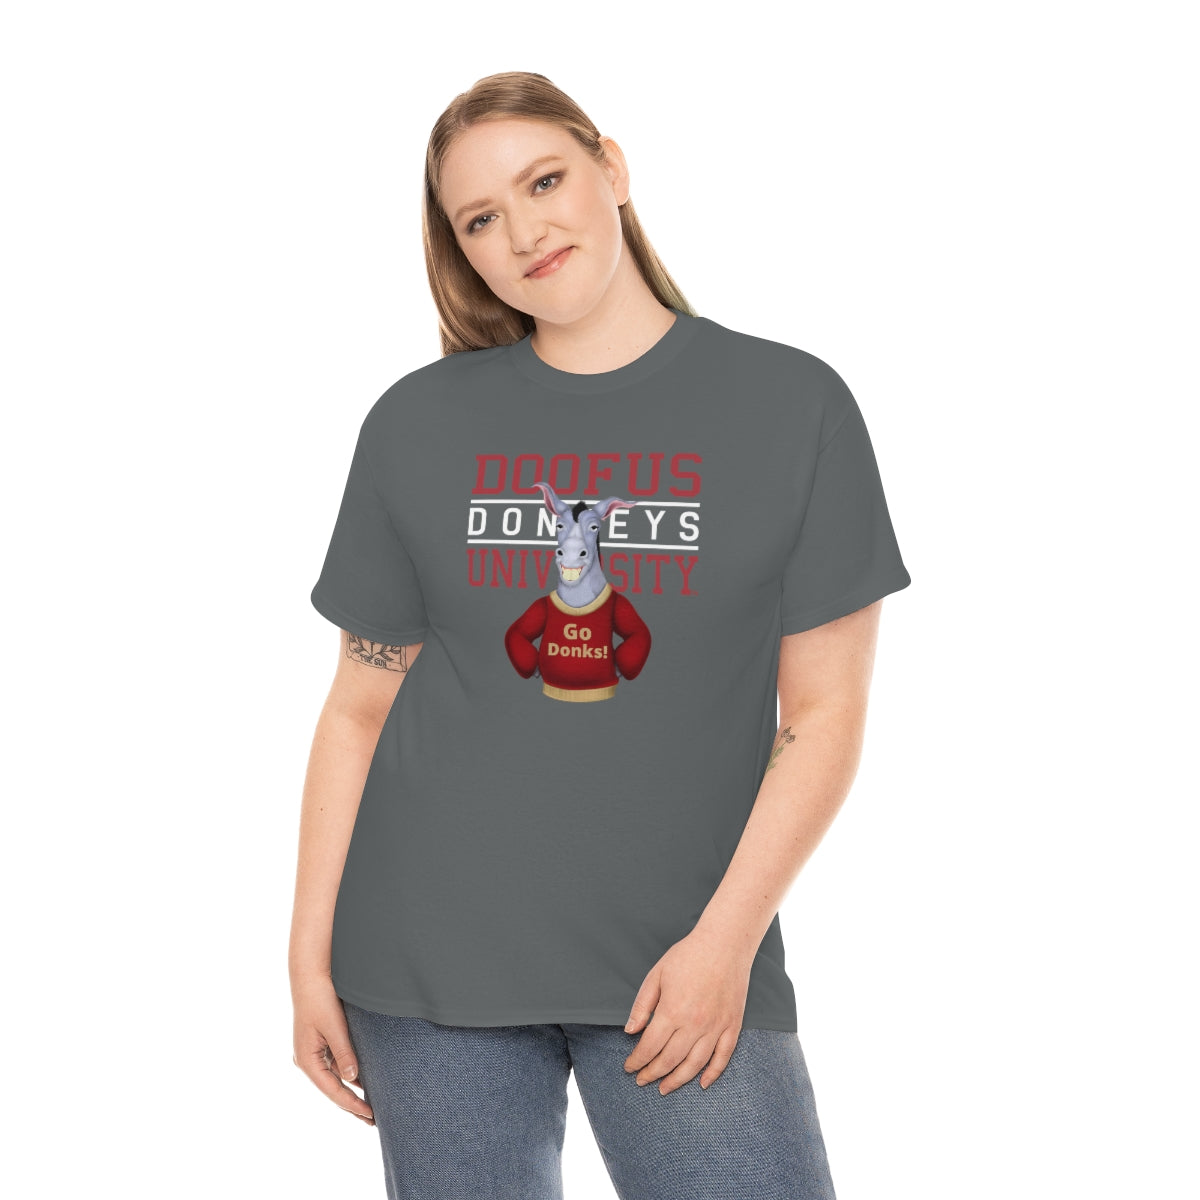 Doofus University™ Donkeys Unisex  Short Sleeve Tee Funny T Shirt Gag Gift